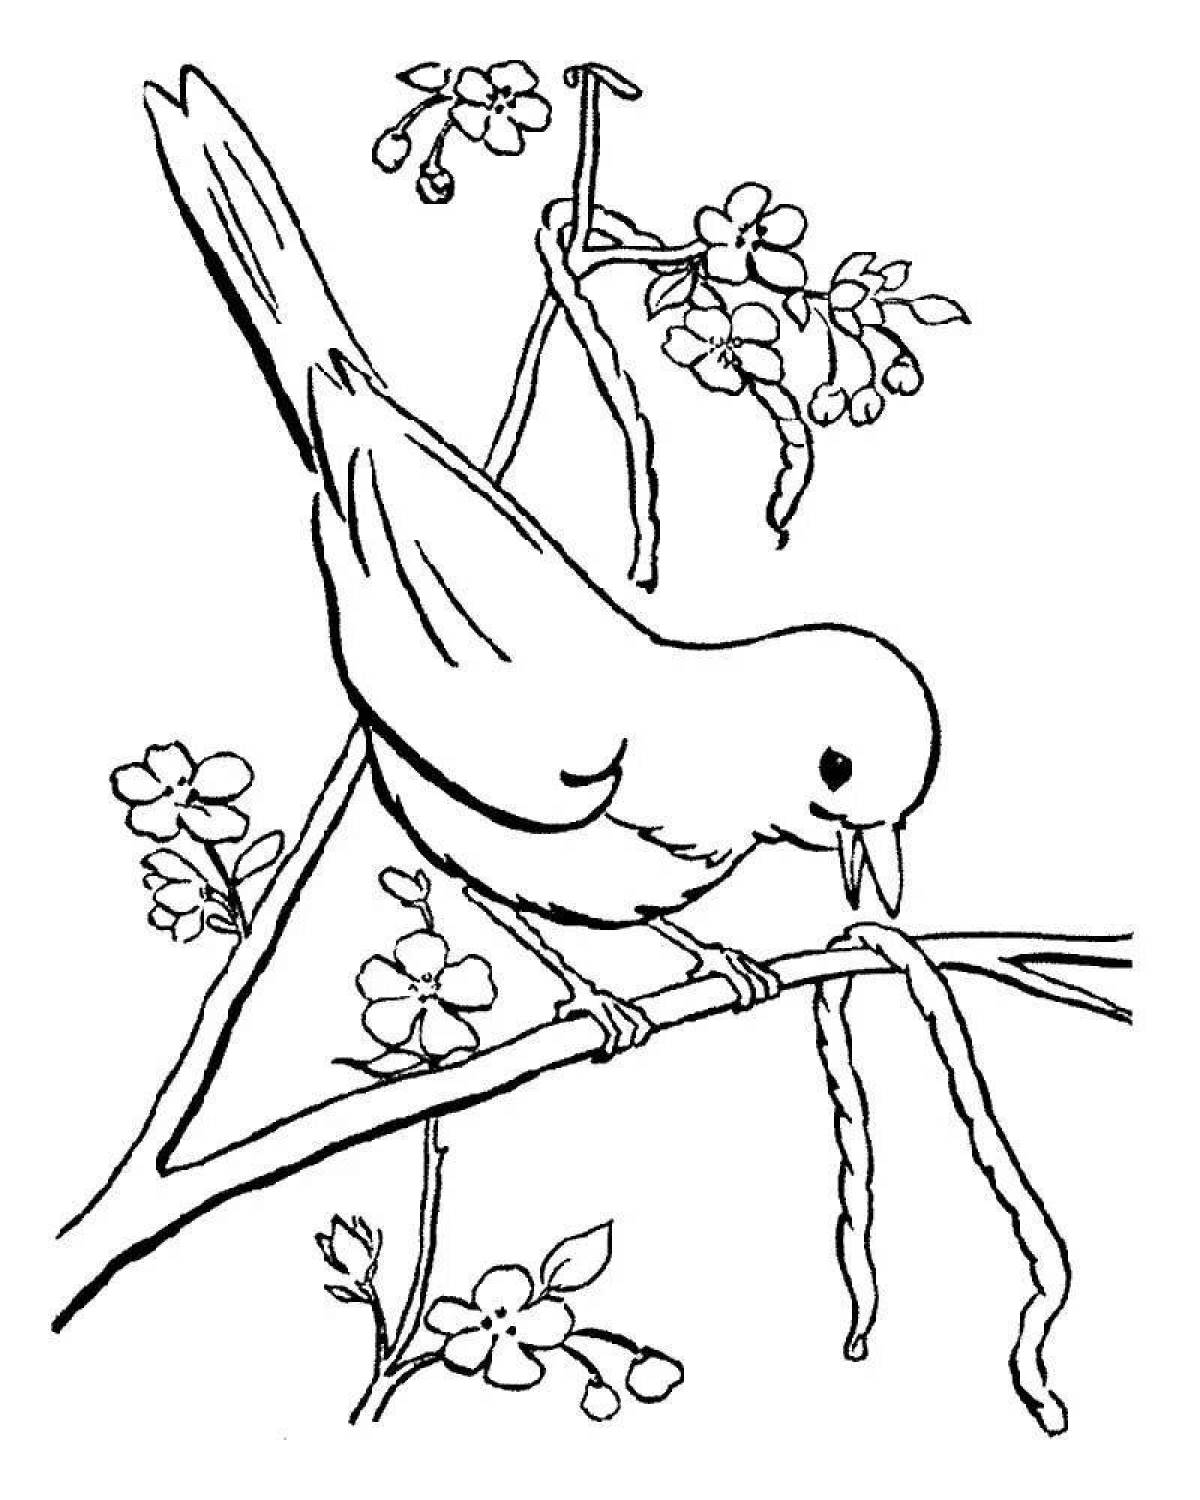 Brilliant bird on a branch